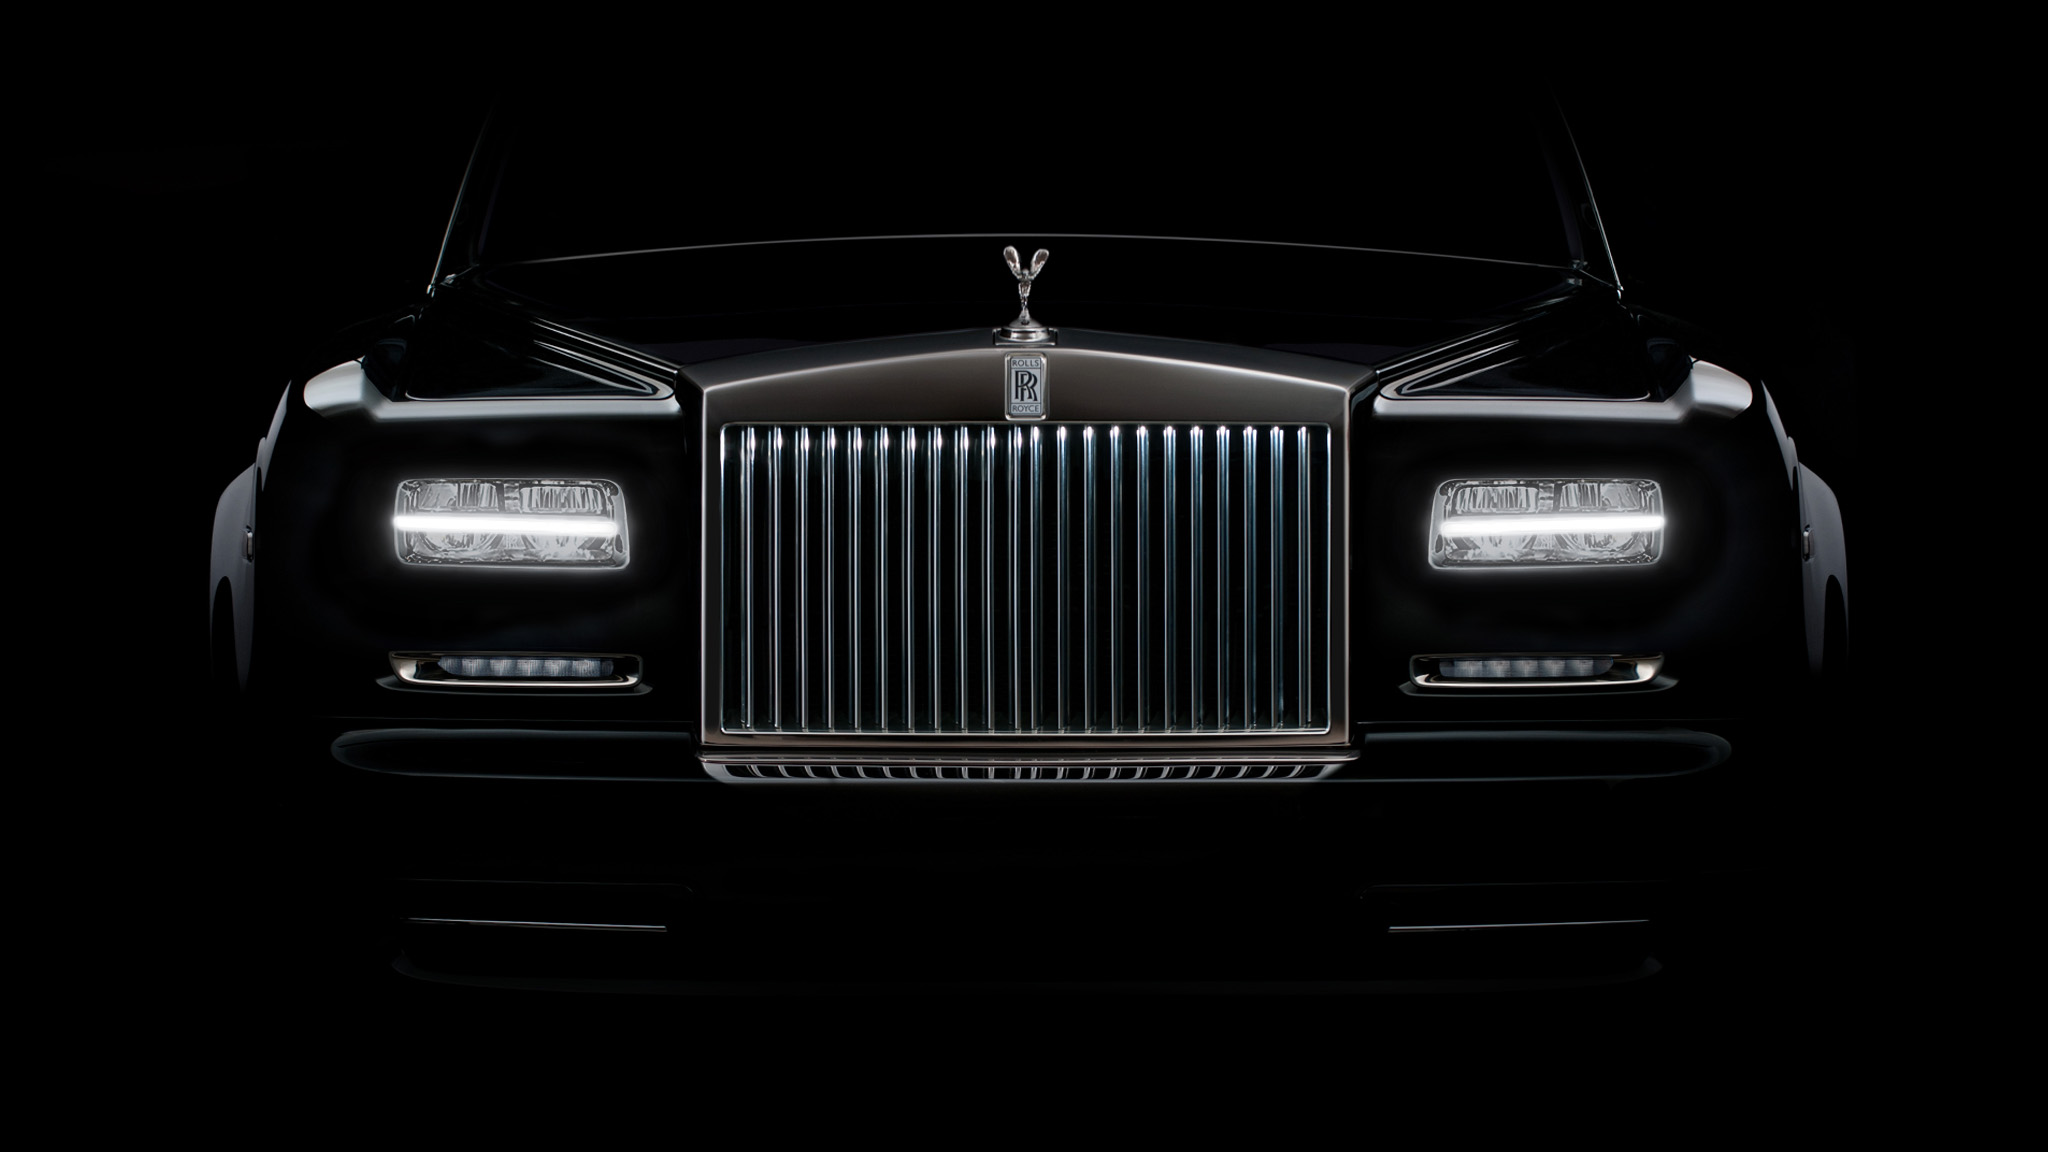 Rolls Royce Phantom Wallpapers Vehicles Hq Rolls Royce Phantom Pictures 4k Wallpapers 19